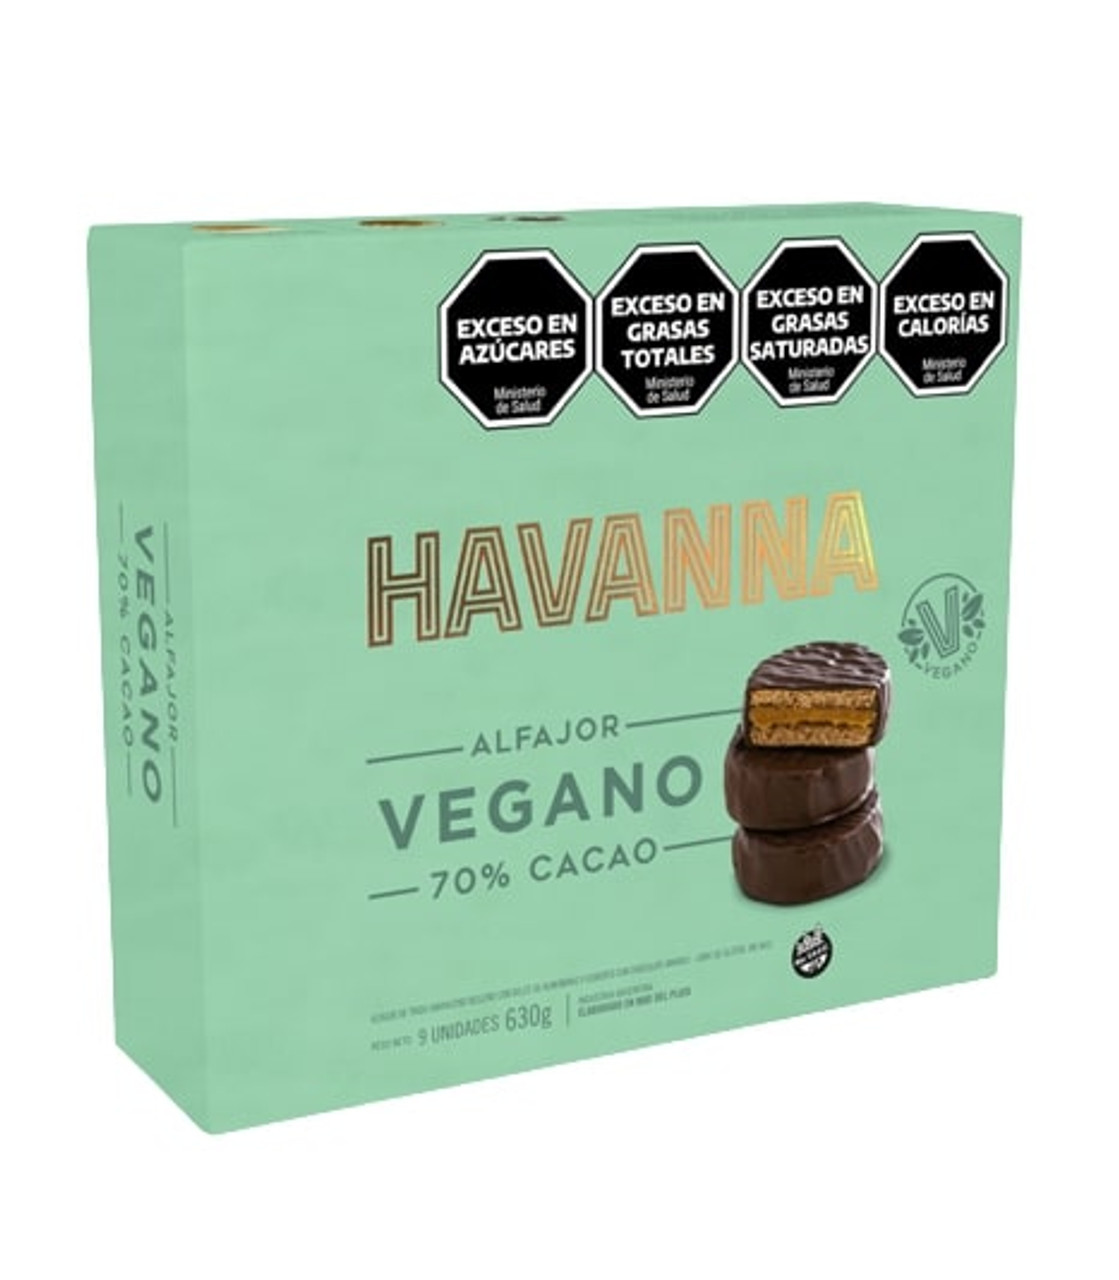 Havanna Vegan Alfajor 70% Chocolate Gluten-Free Cocoa with Almond Dulce de  Leche, 70 g /